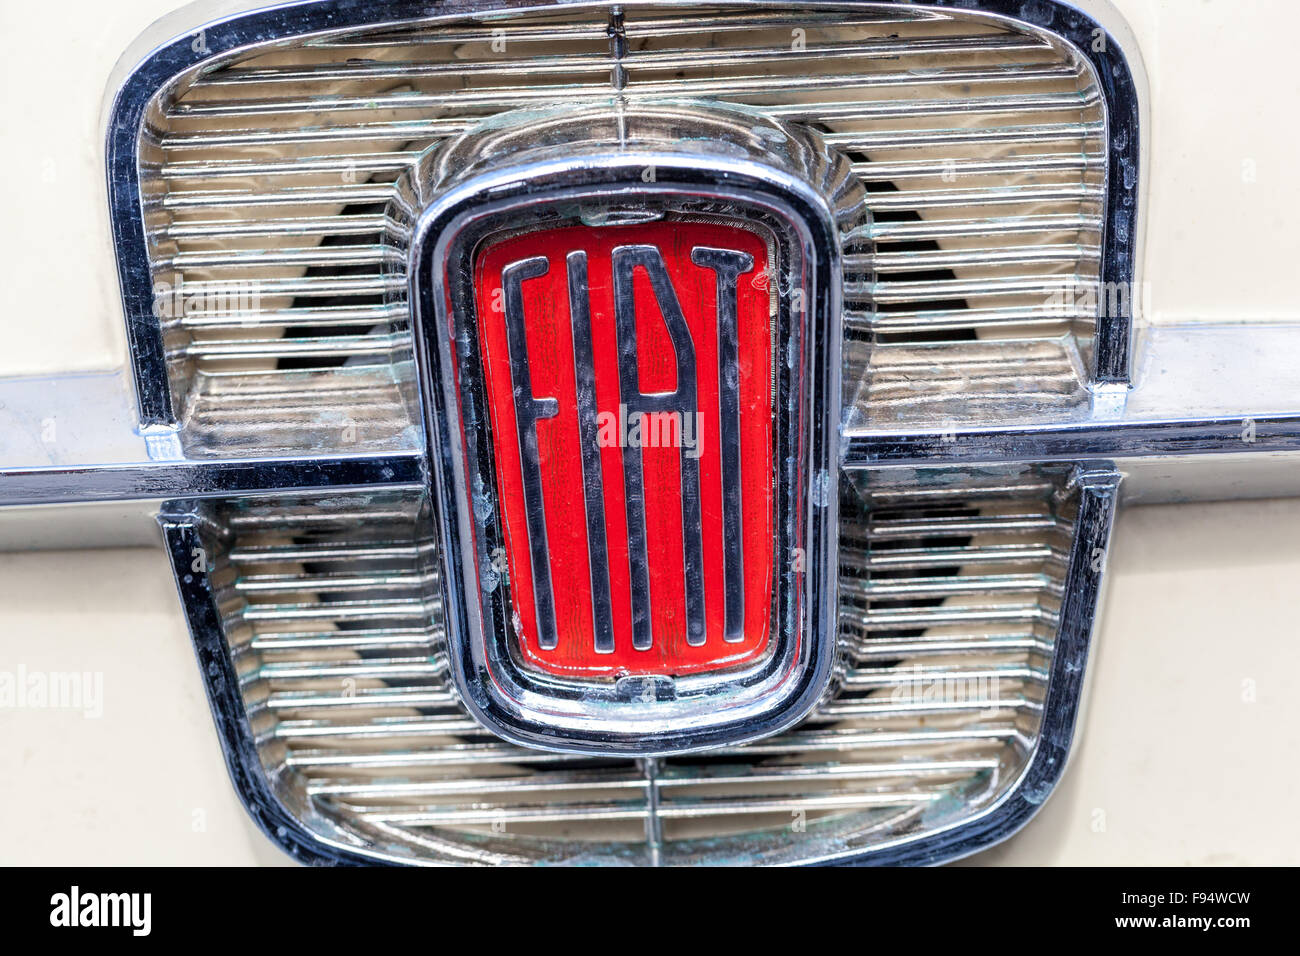 Fiat logo old car Stock Photo